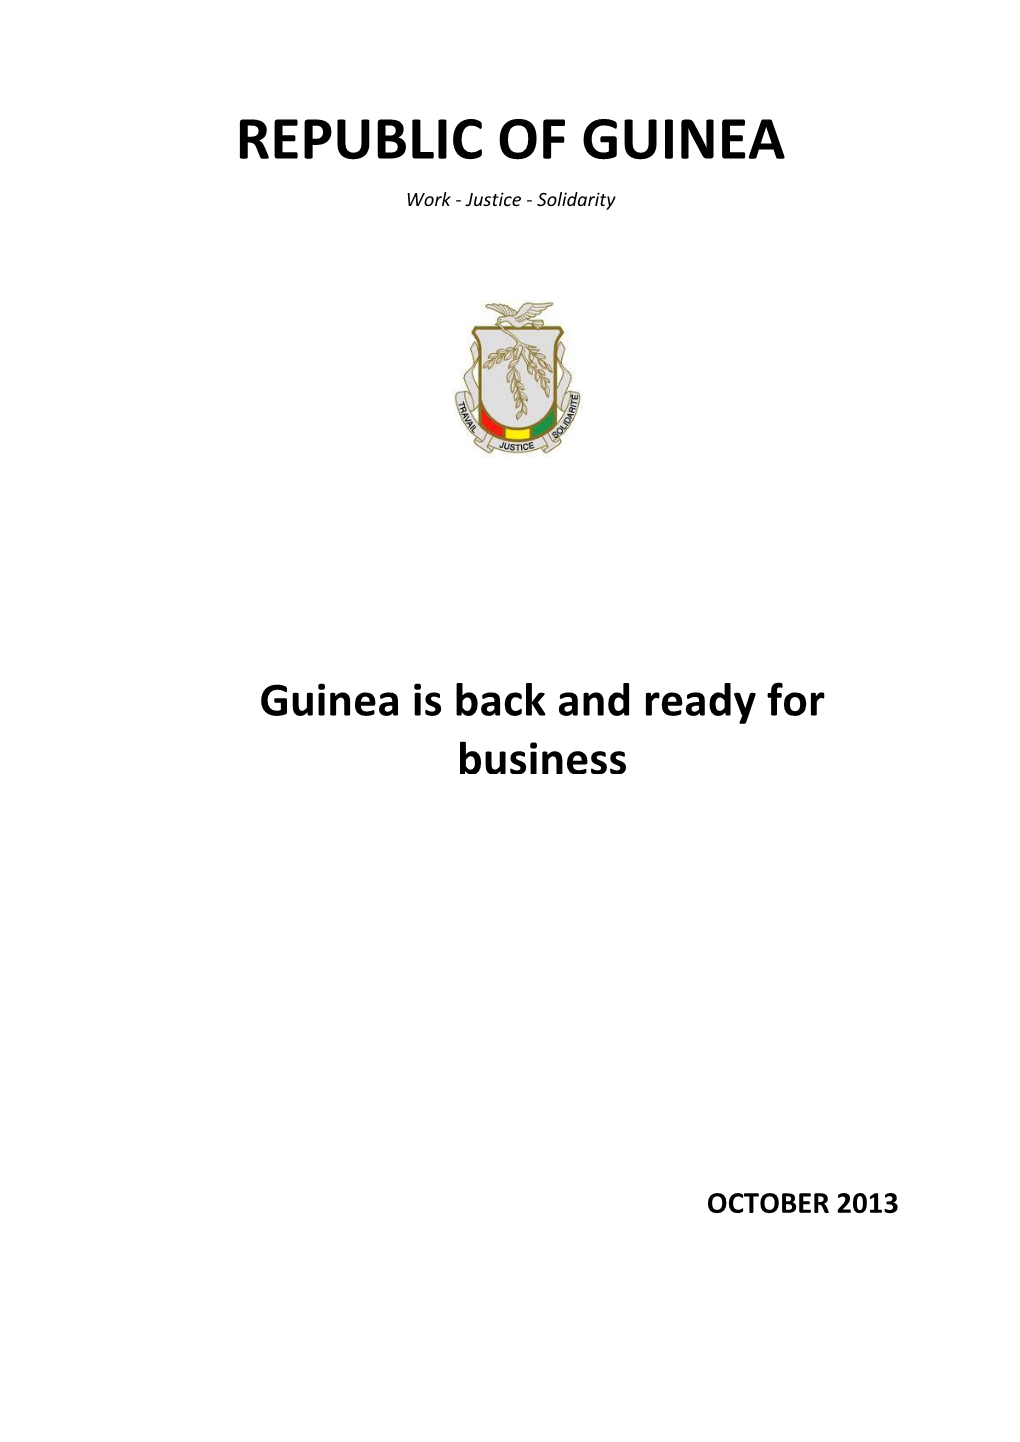 REPUBLIC of GUINEA Work - Justice - Solidarity